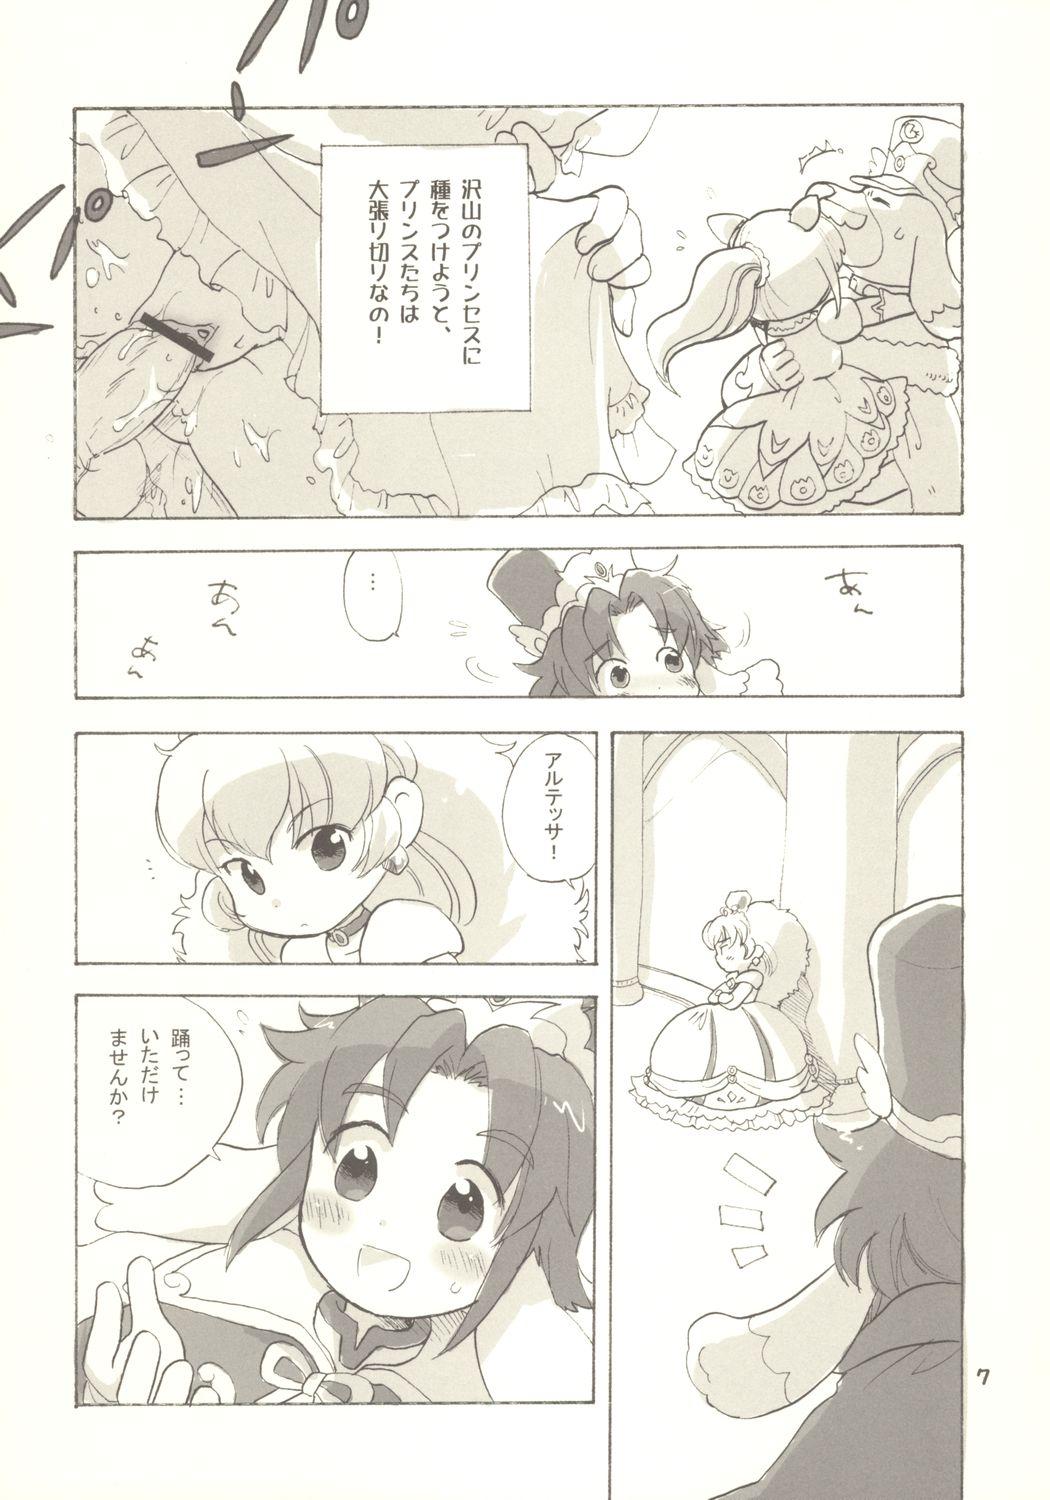 Submissive Egao ni Nare - Please give me smiling face - Fushigiboshi no futagohime French - Page 6